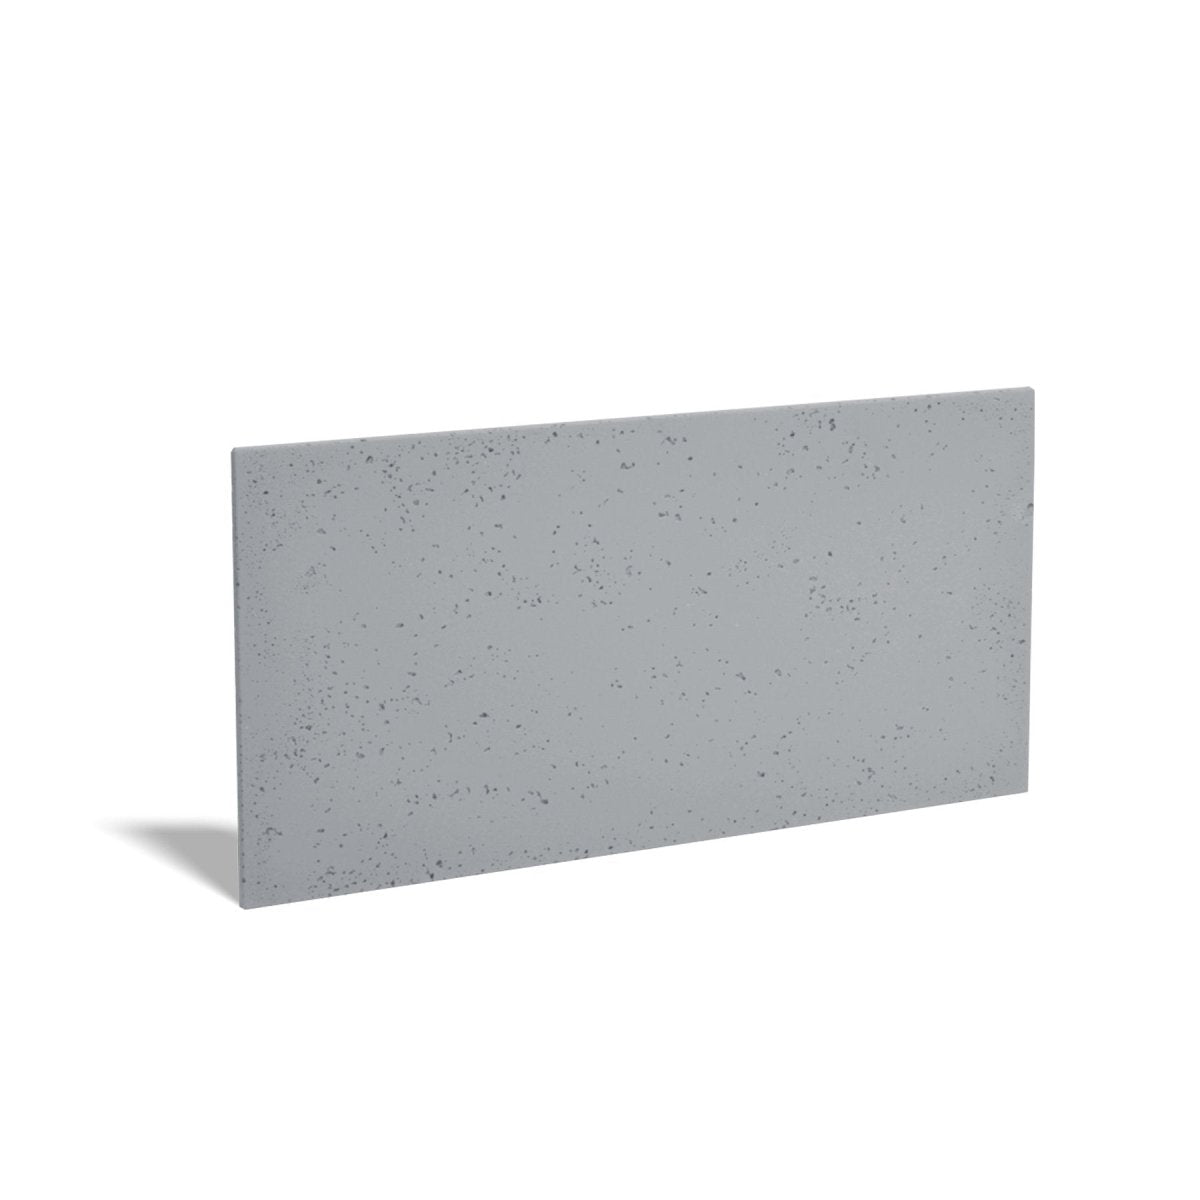 Concrete Wall Panel INTERIOR - 150 x 75 cm - DecorMania.eu